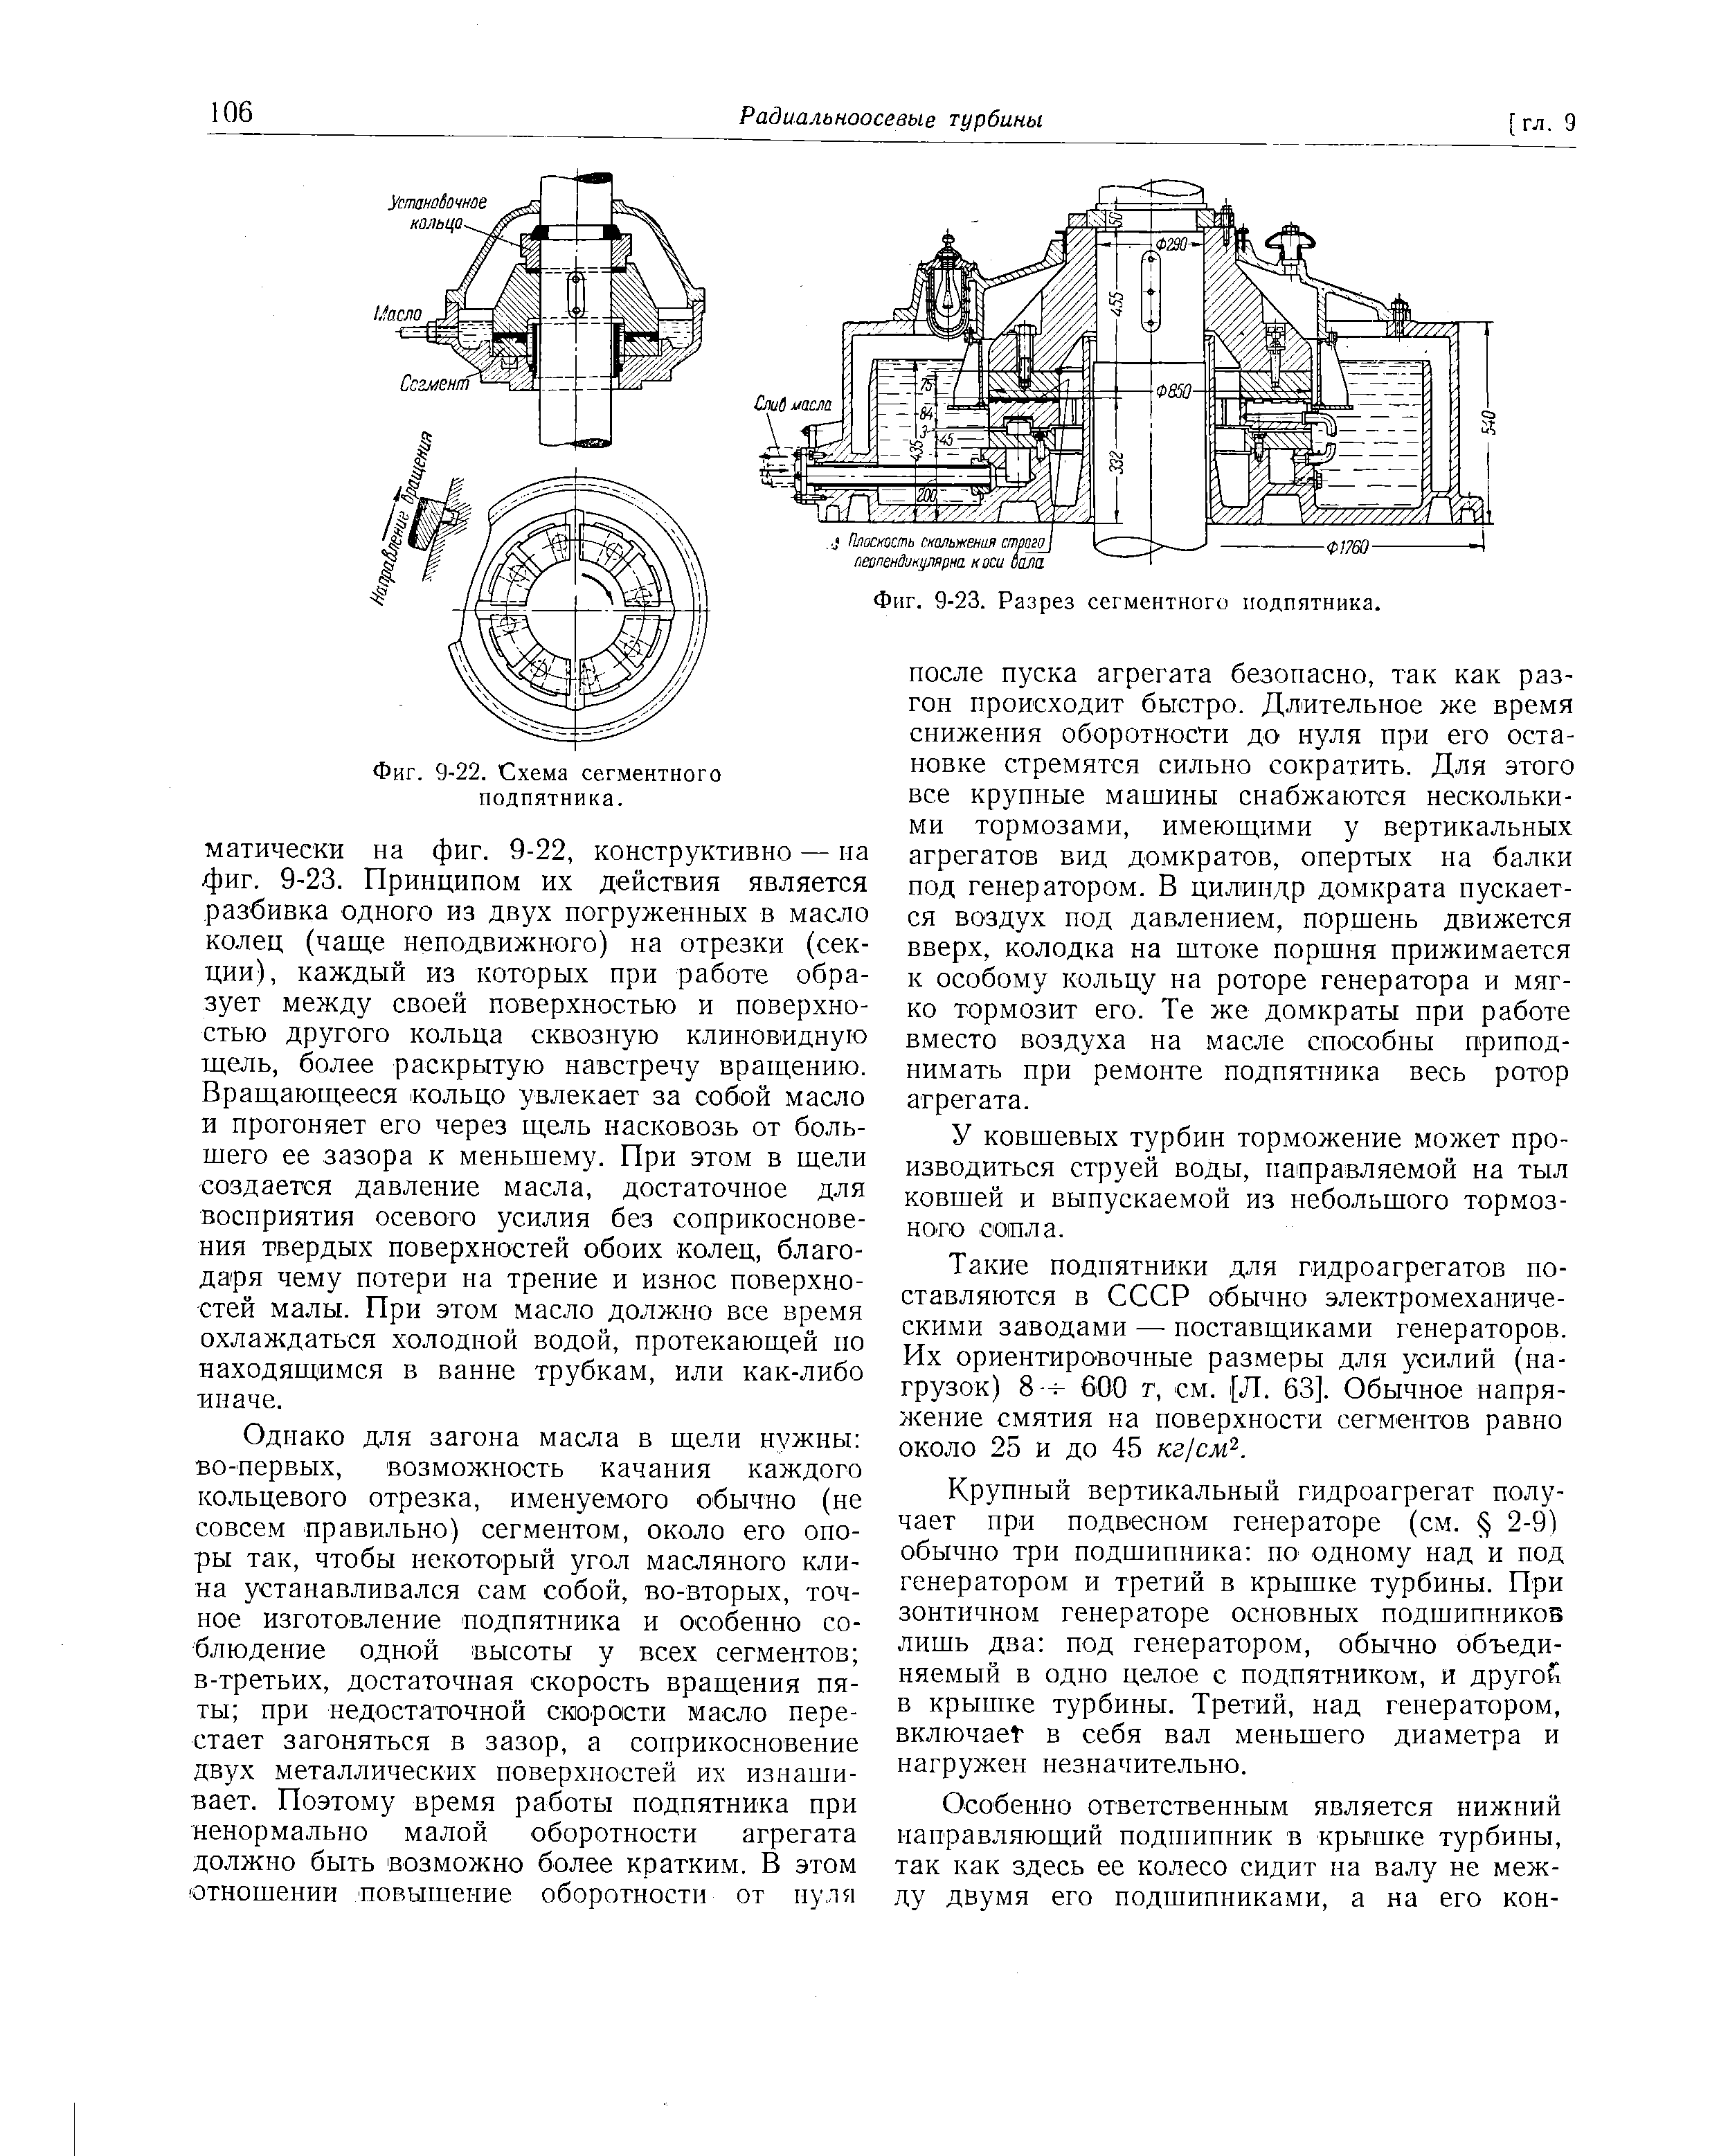 Фиг. 9-22. Схема сегментного подпятника.
